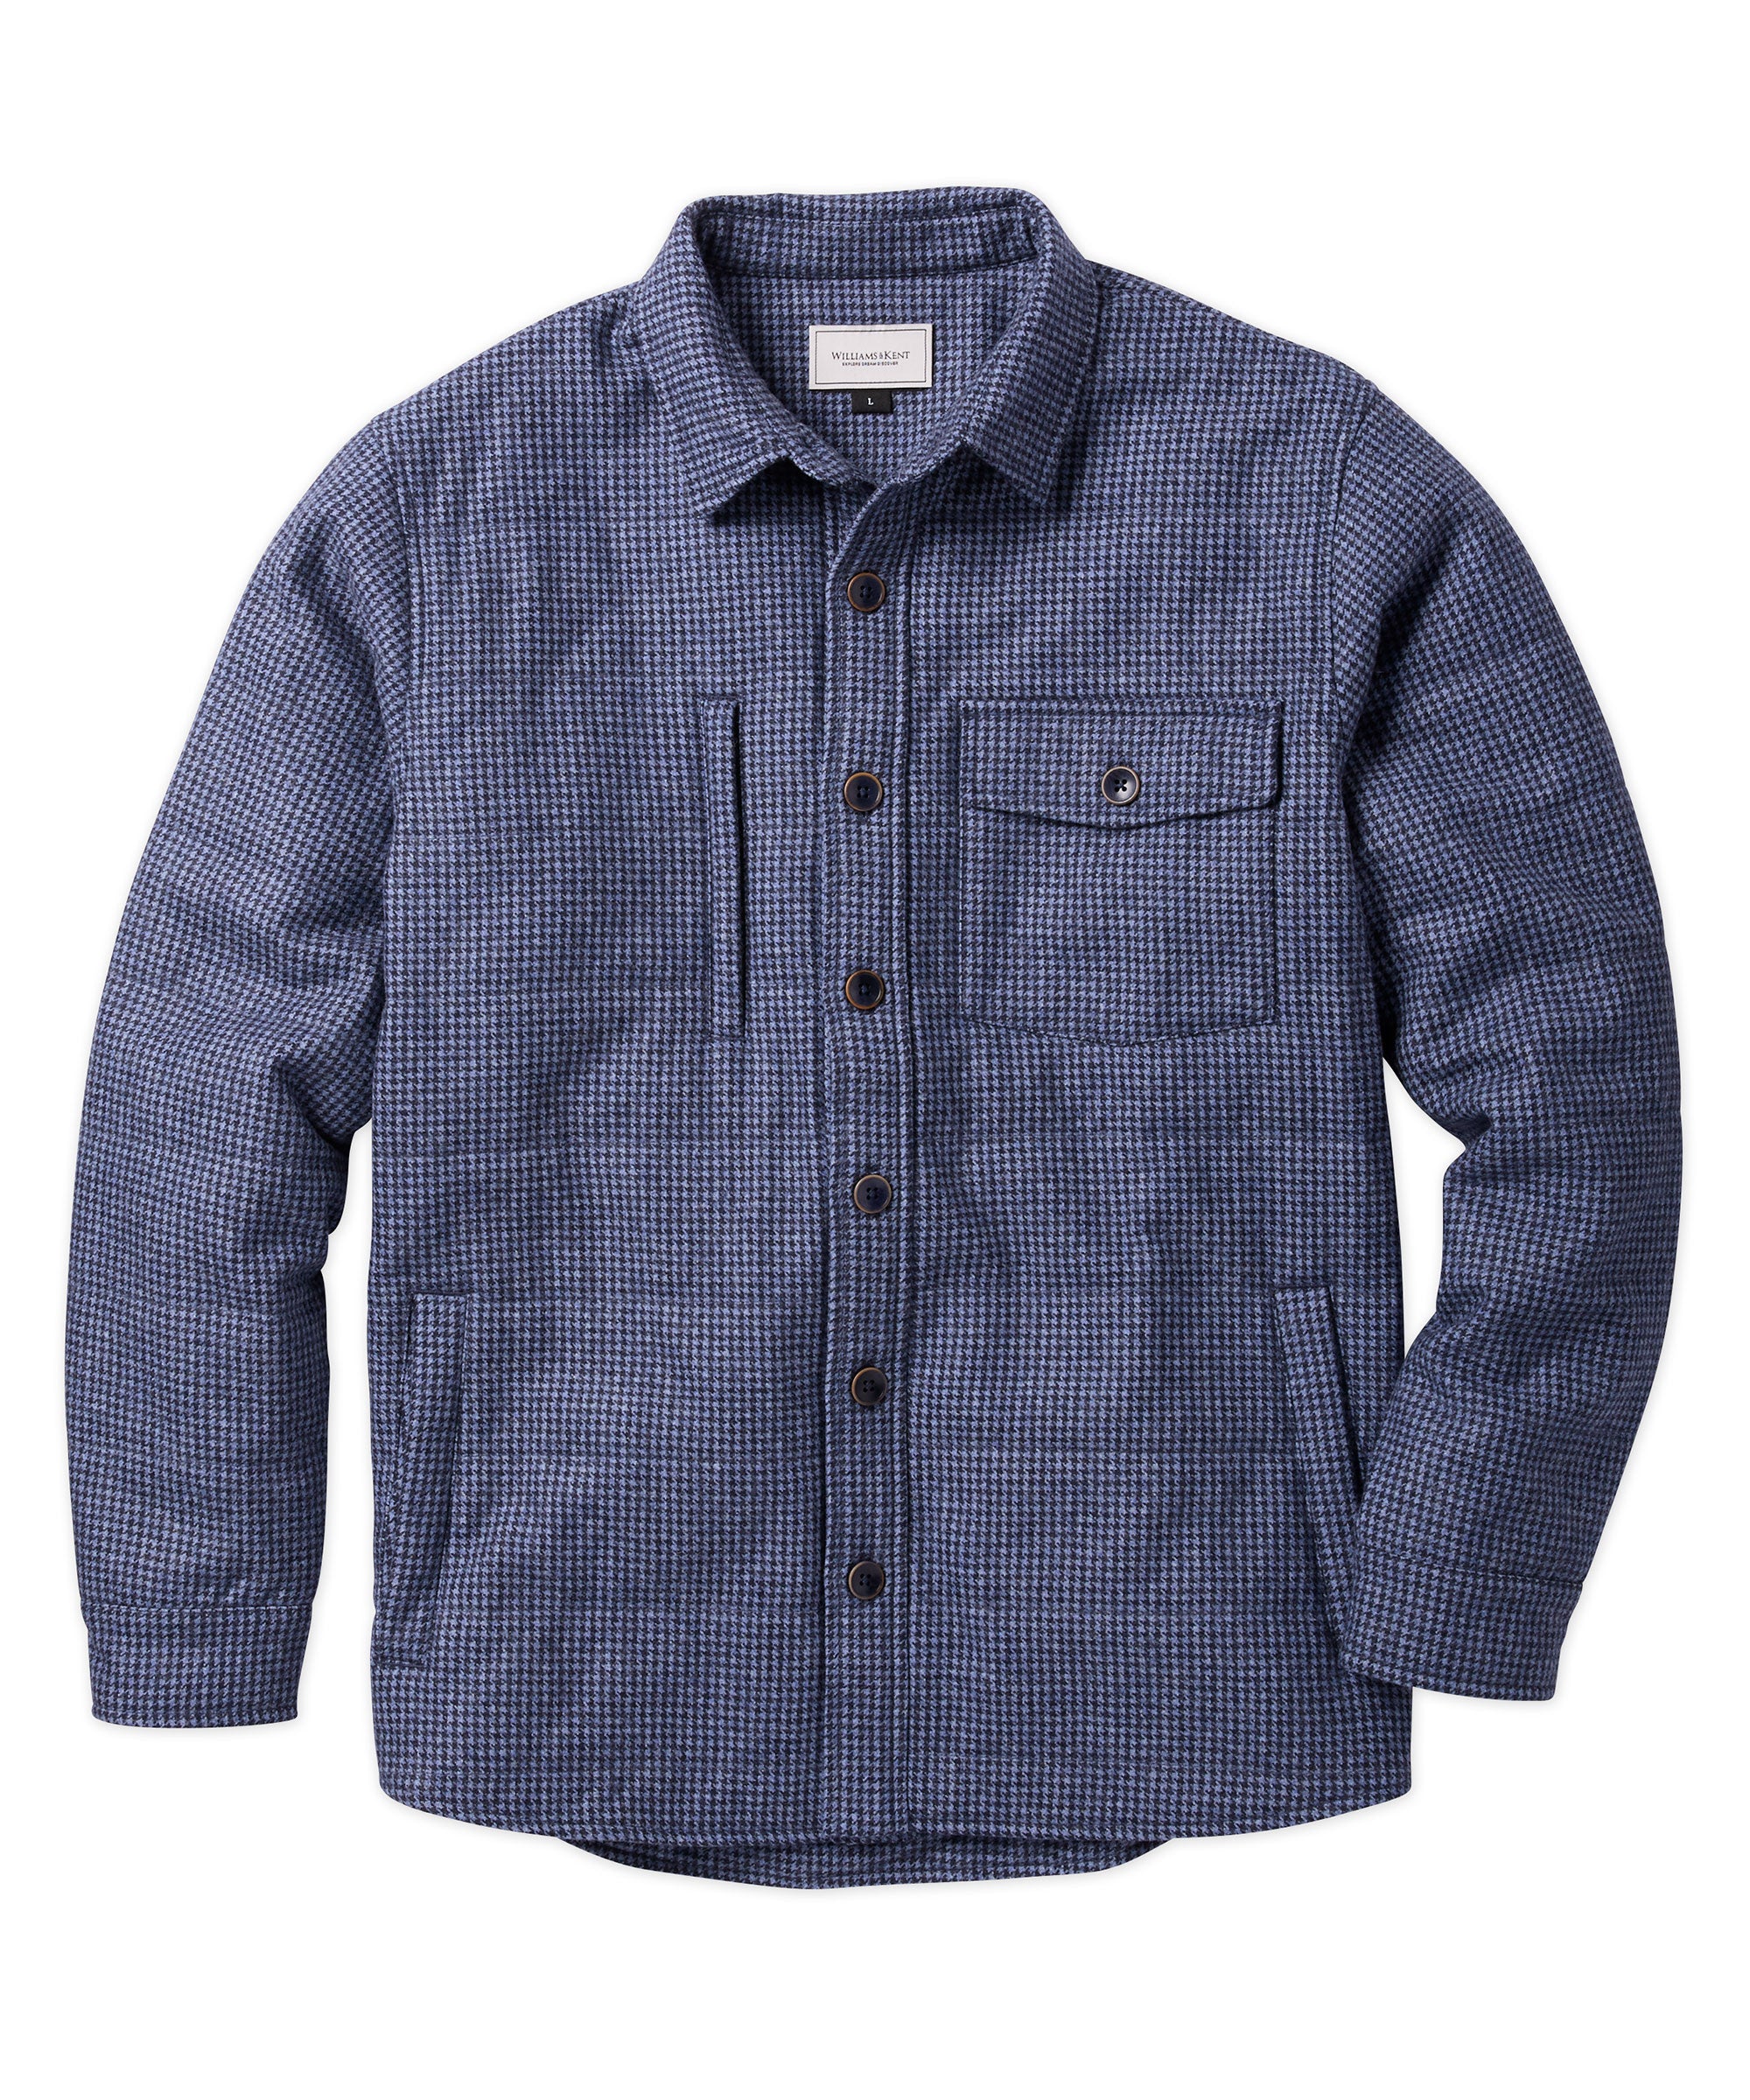 Wool-Blend Houndstooth Shirt Jacket Williams Kent, 52% OFF